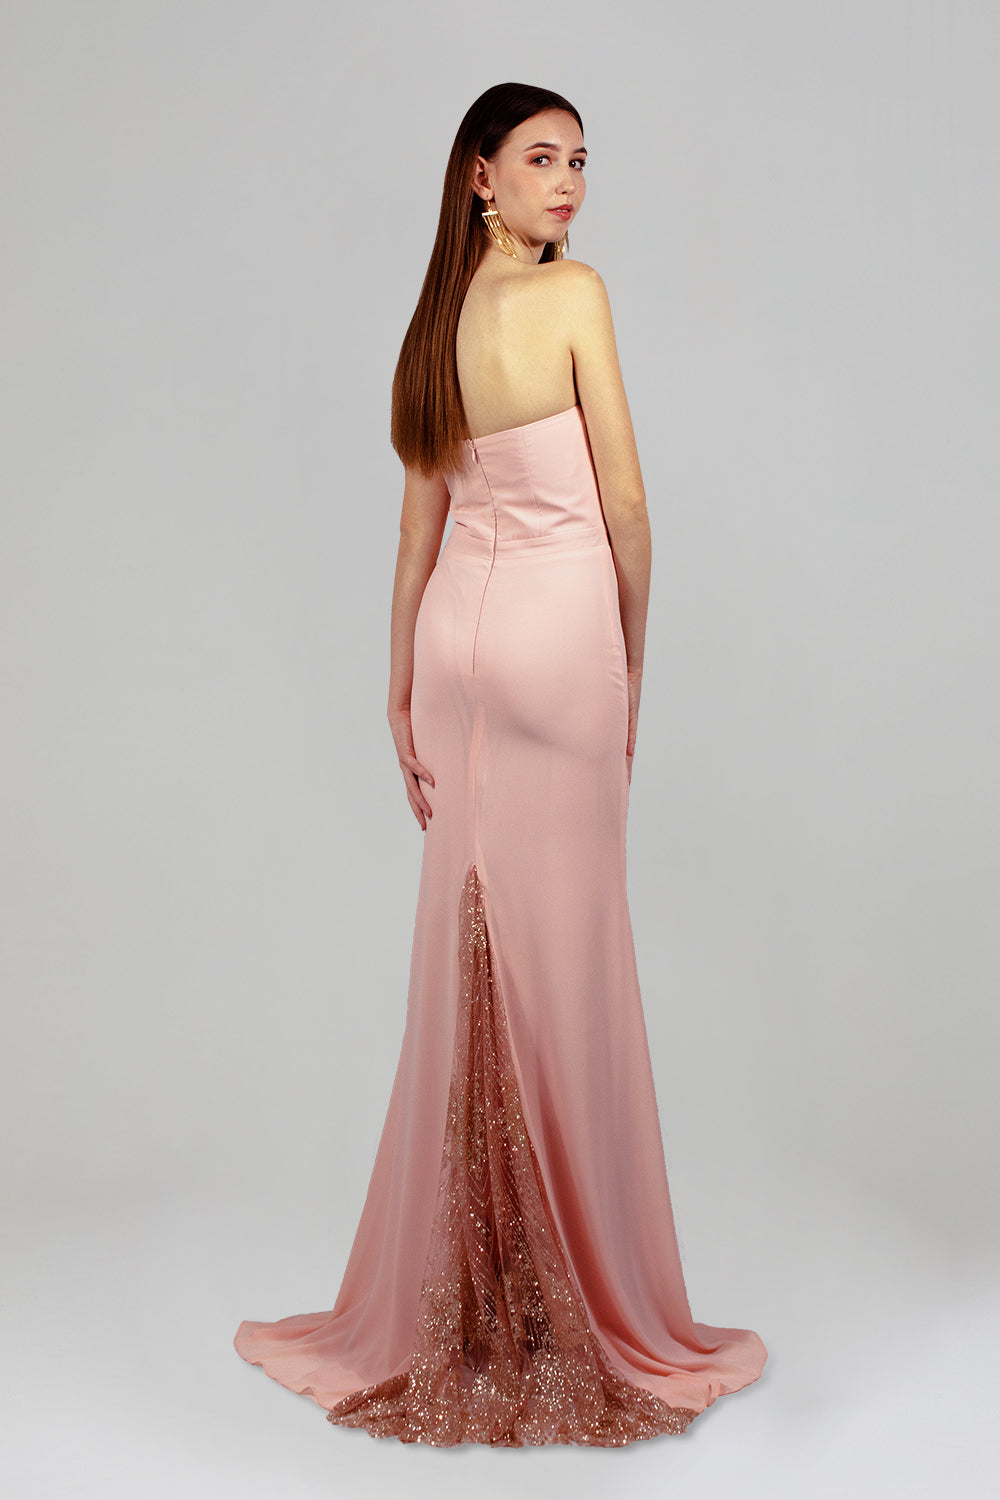 strapless pink formal dresses perth australia online envious bridal & formal